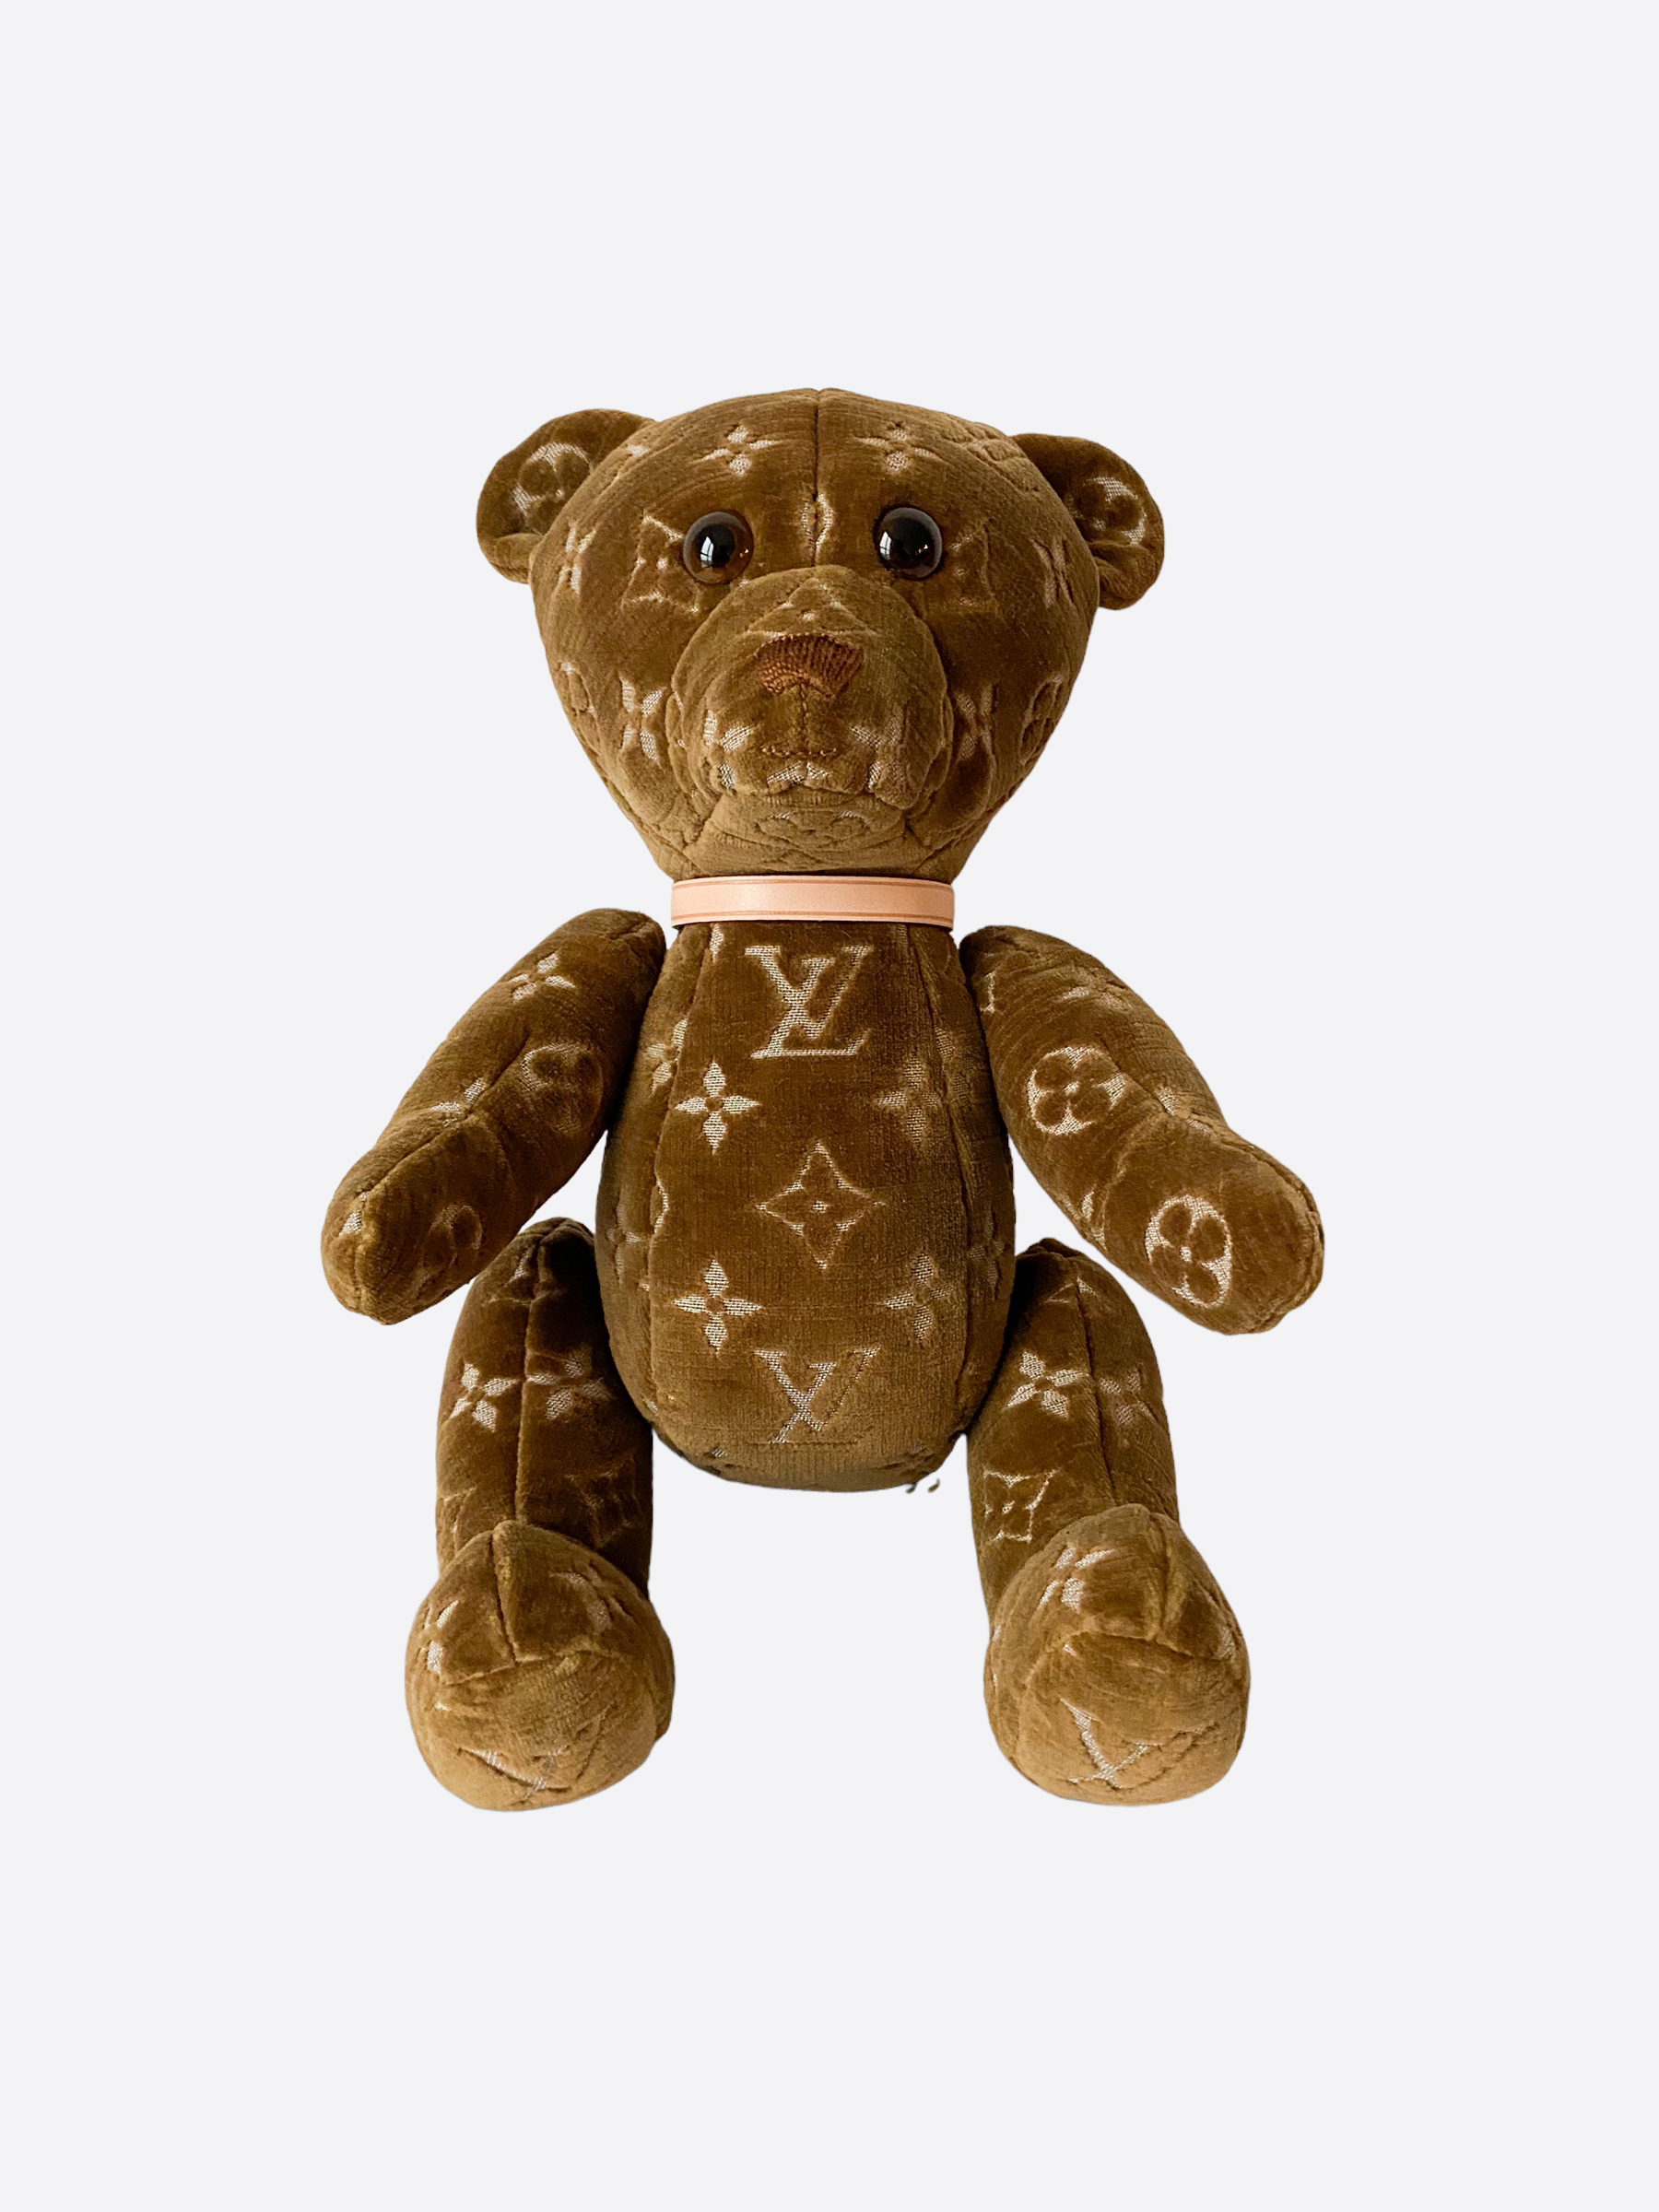 Denim Jacket Monogram Teddy Bear